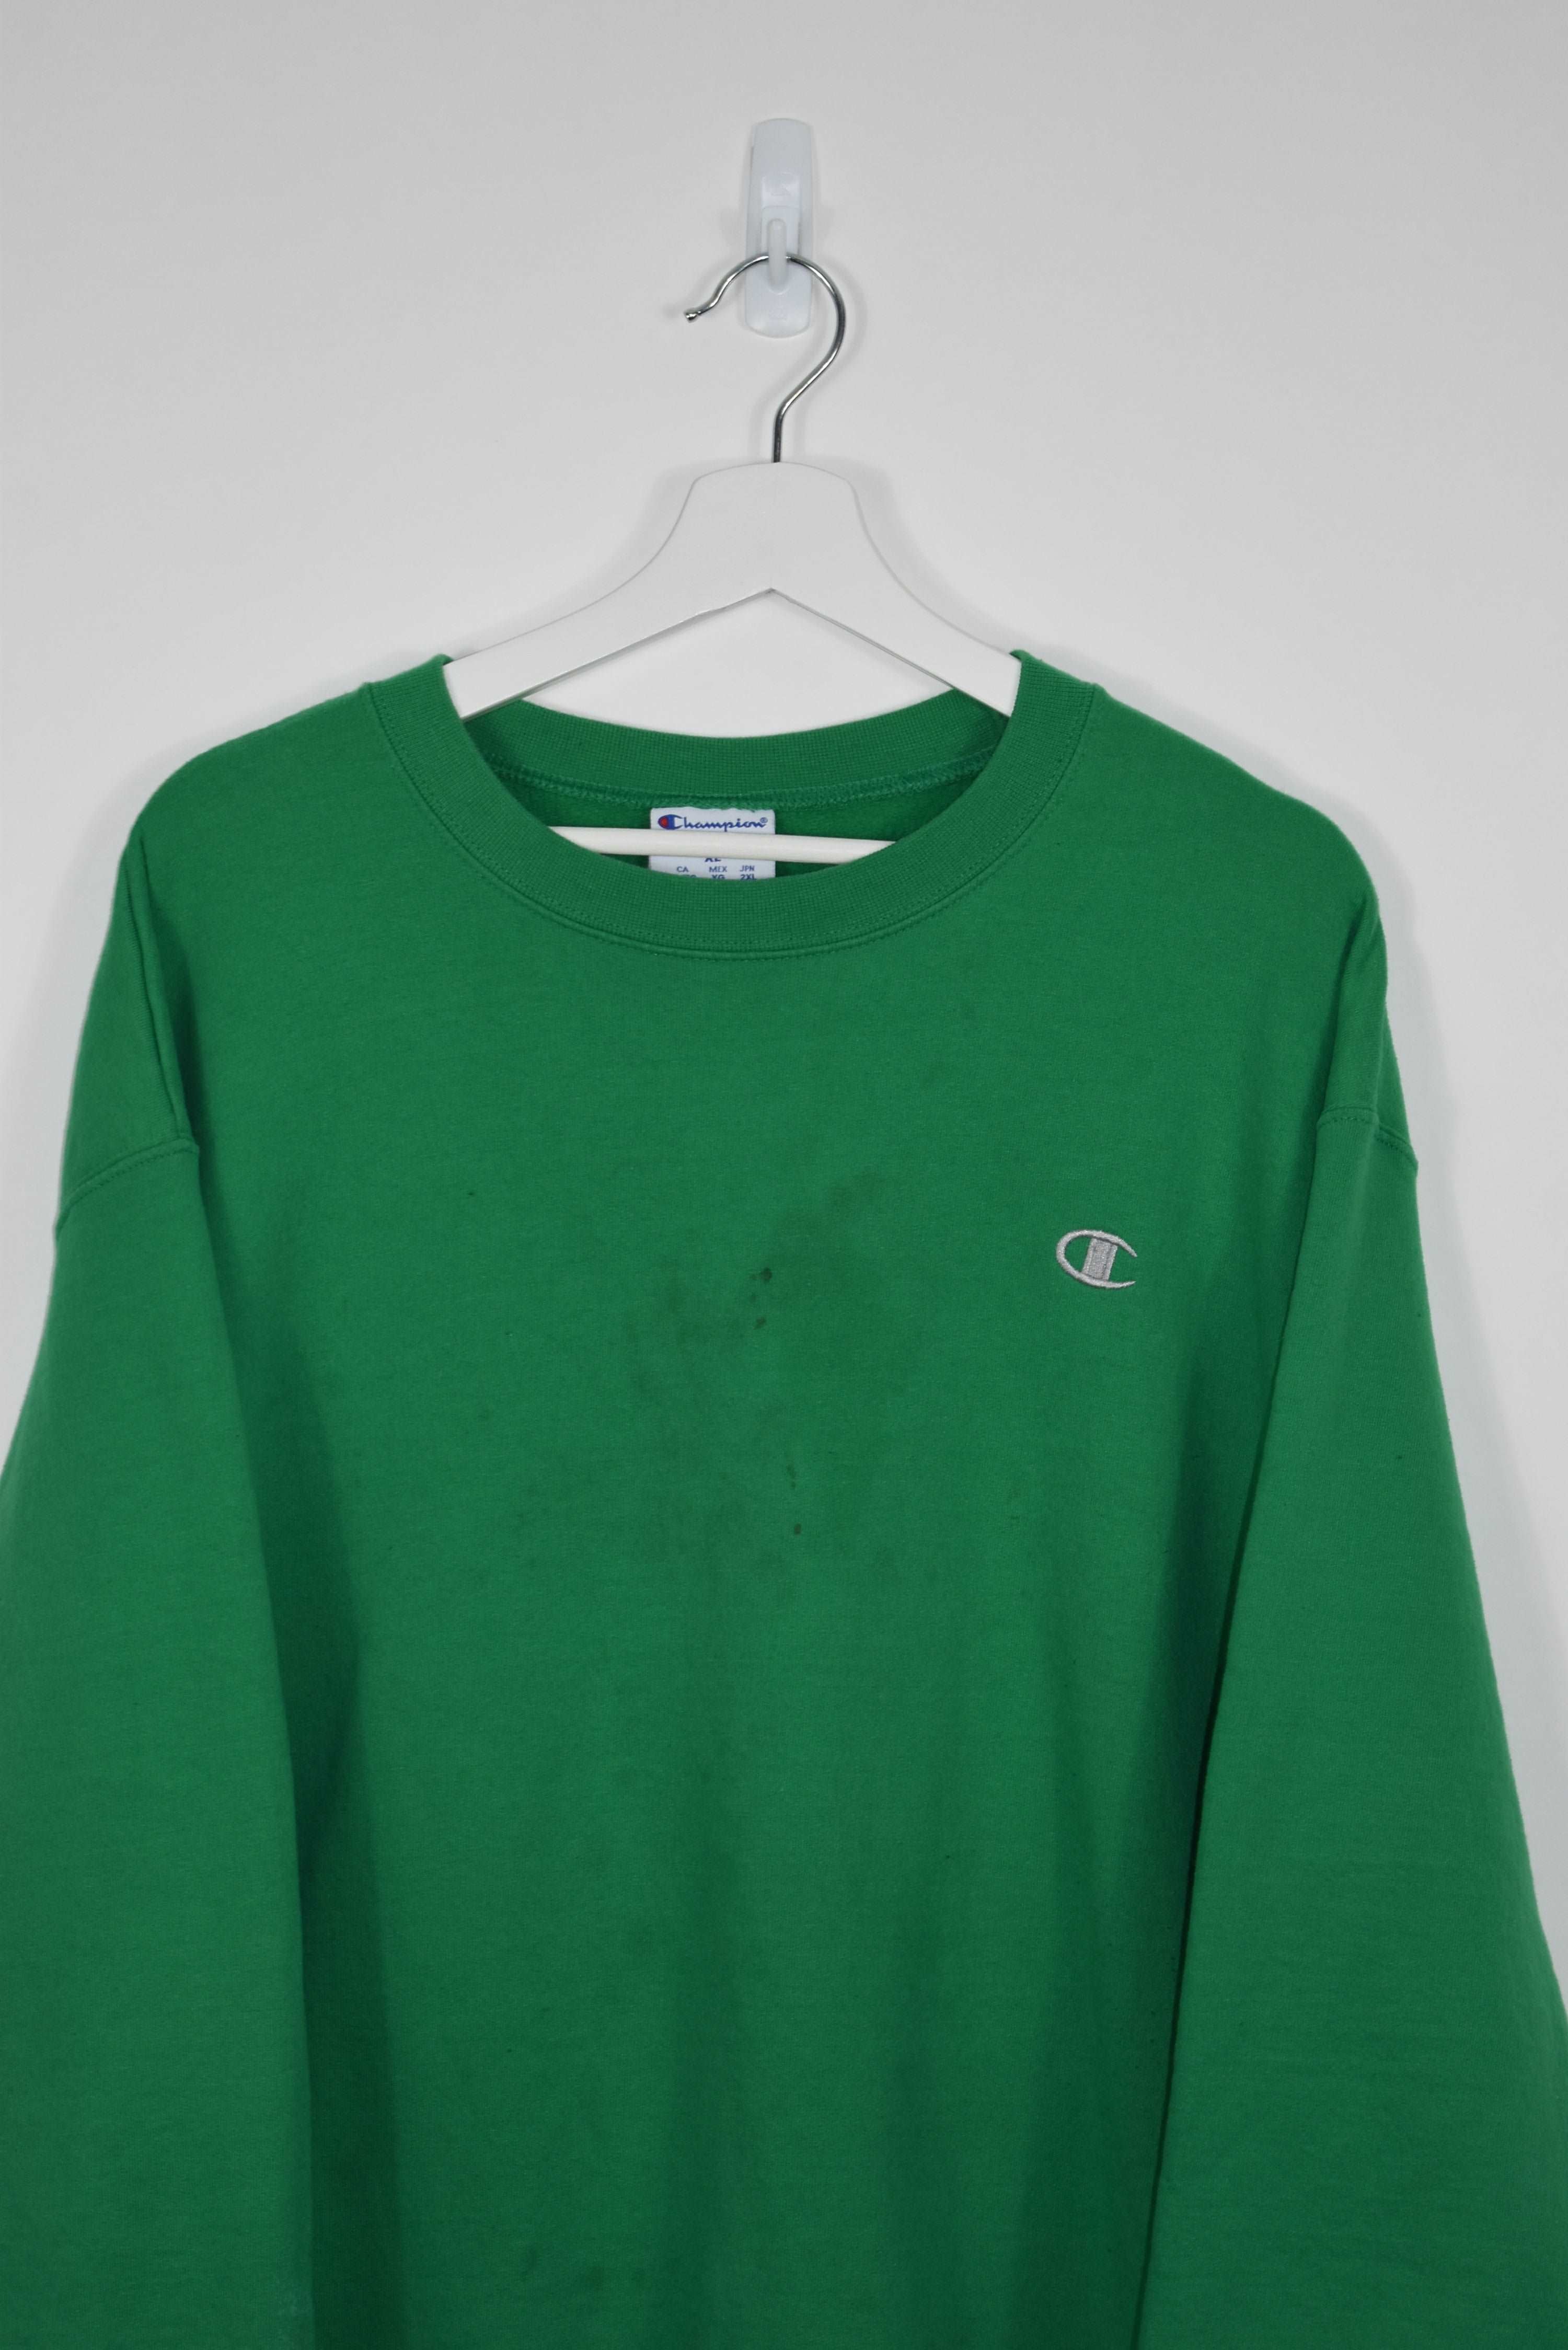 Vintage Champion Green Small Embroidered Logo Sweatshirt XL